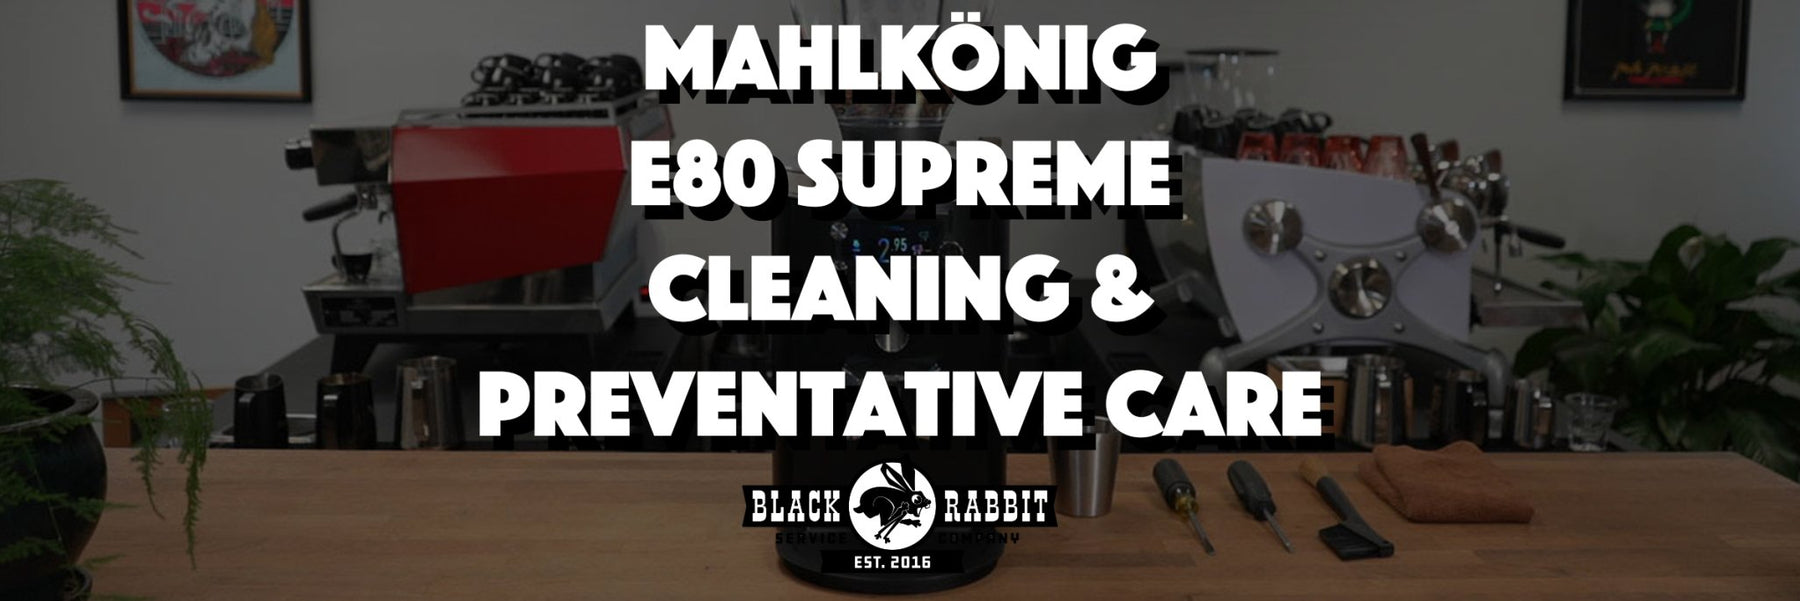 Mahlkönig E80 Supreme Cleaning & Preventative Care | The Rabbit Hole - Black Rabbit Service Co.